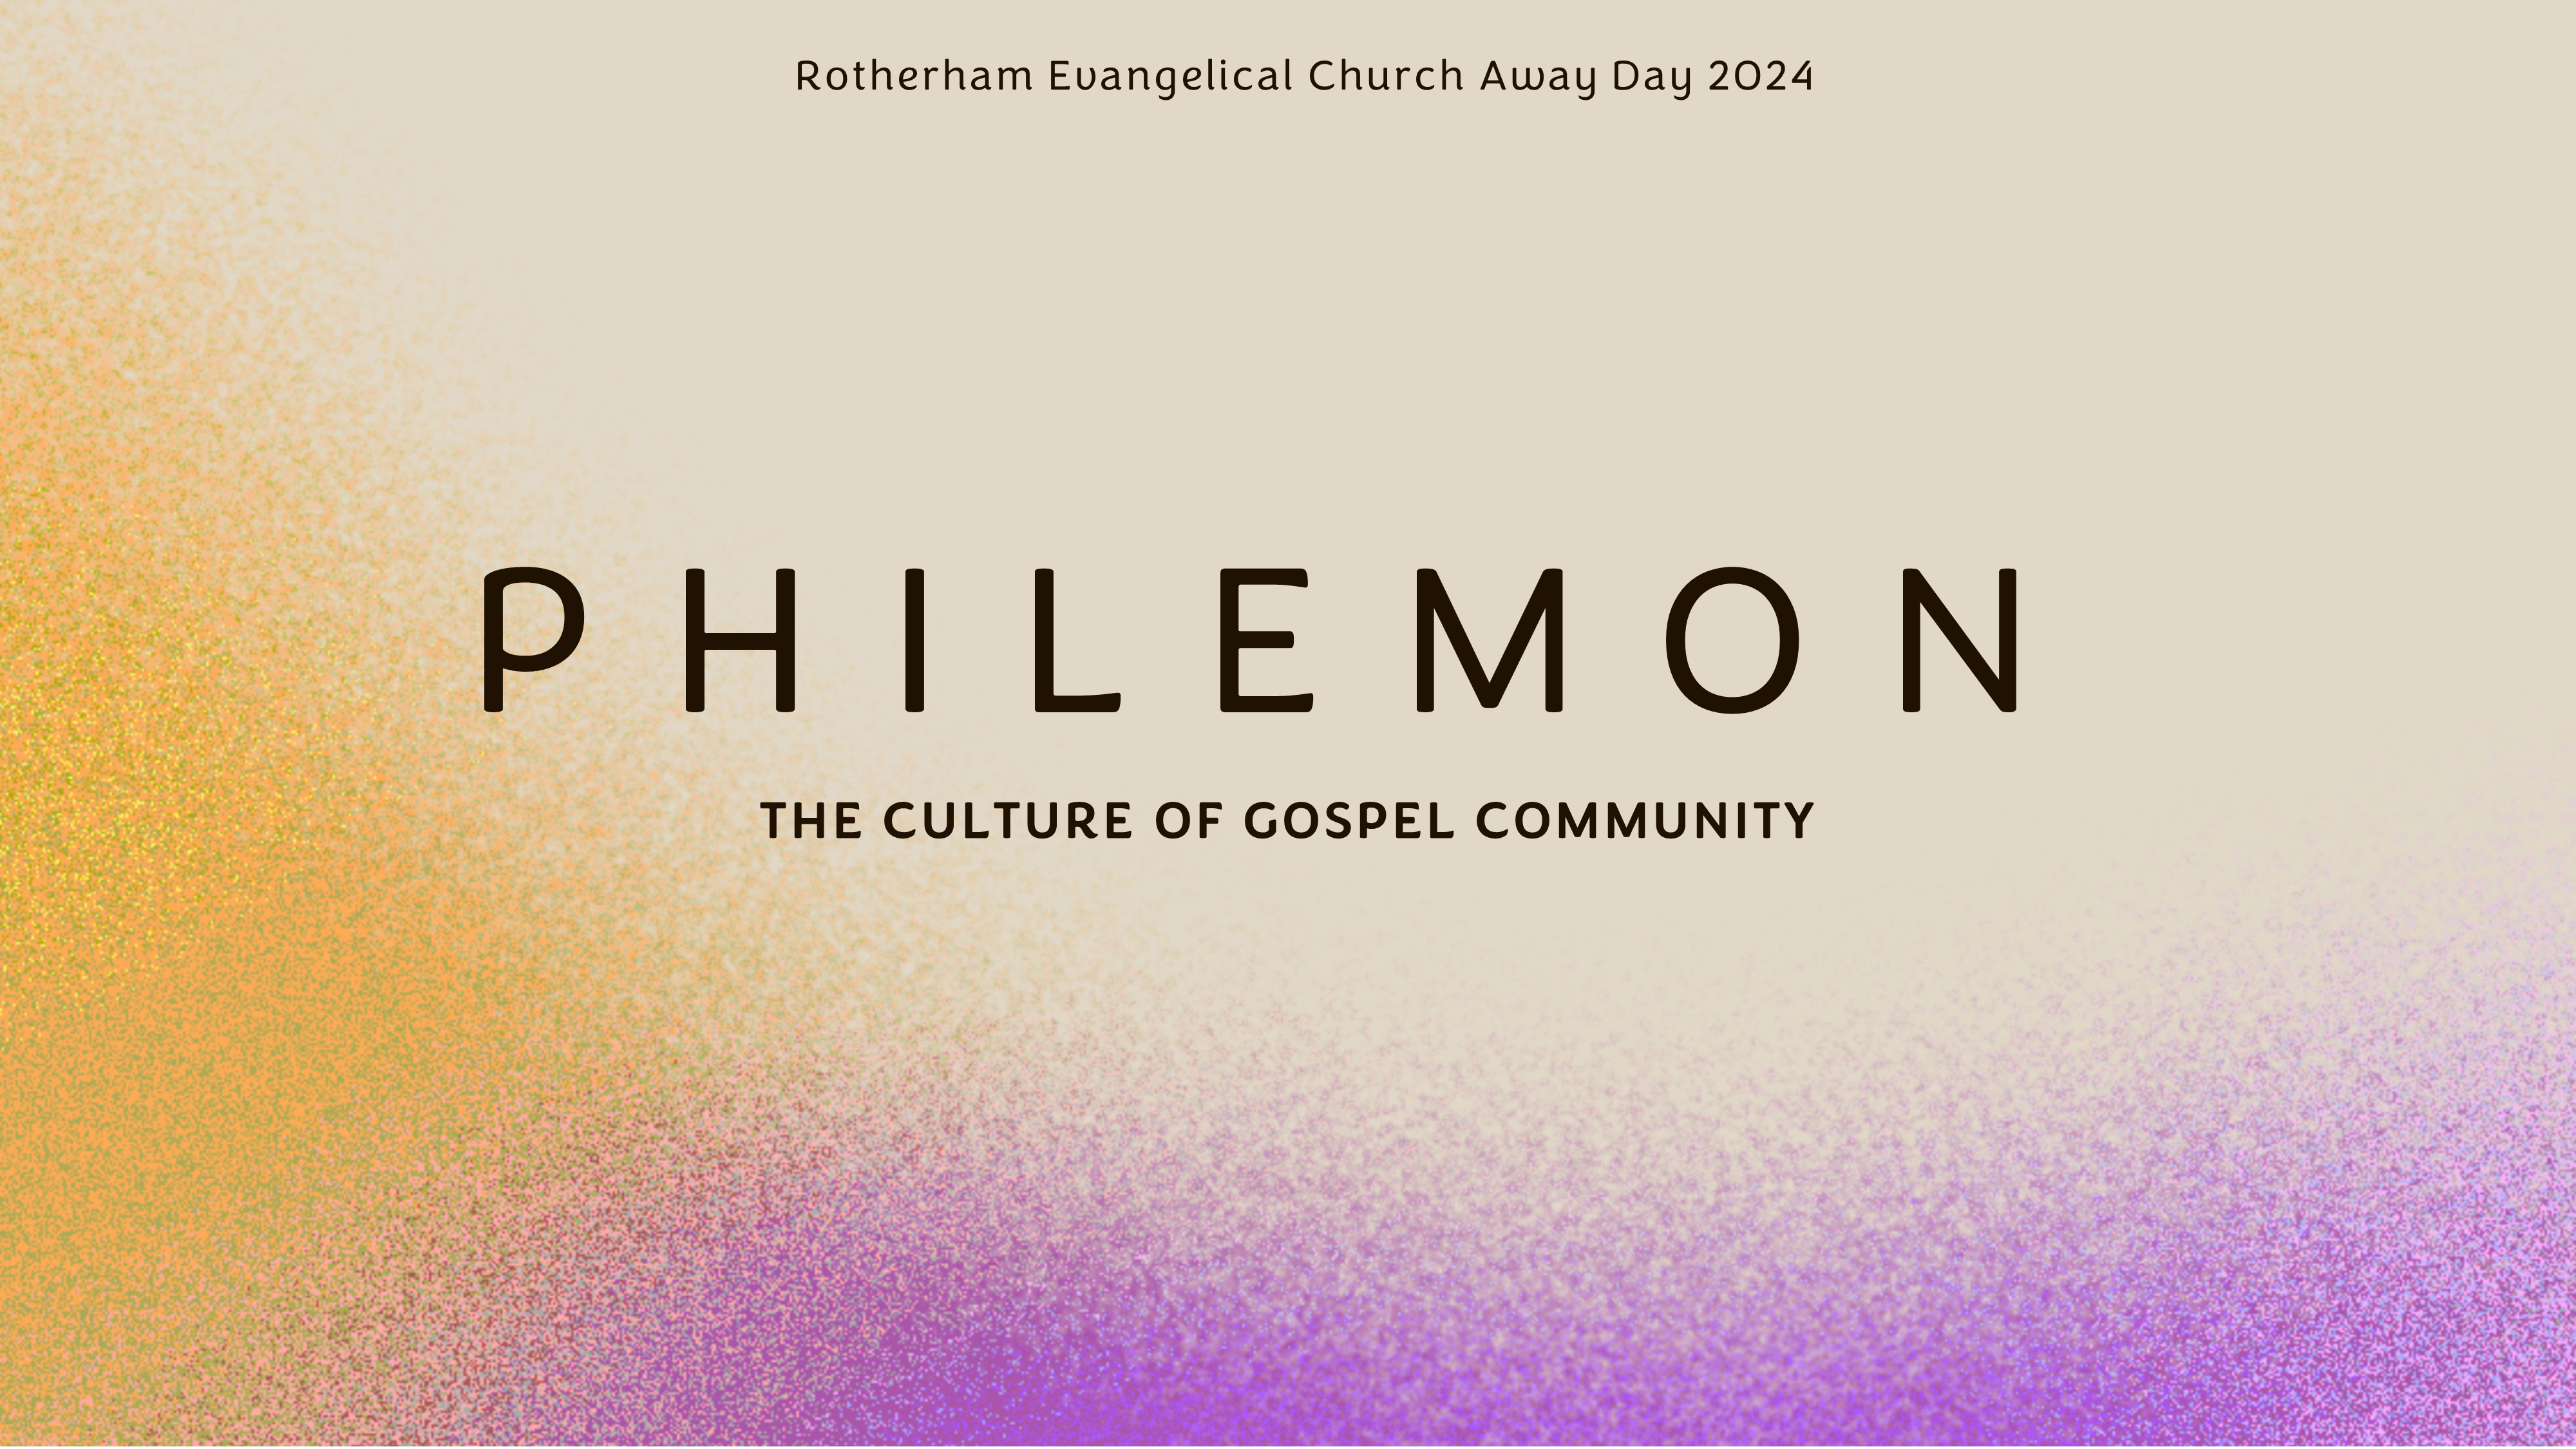 Philemon; The Culture of Gospel Community | Church Day Away 2024